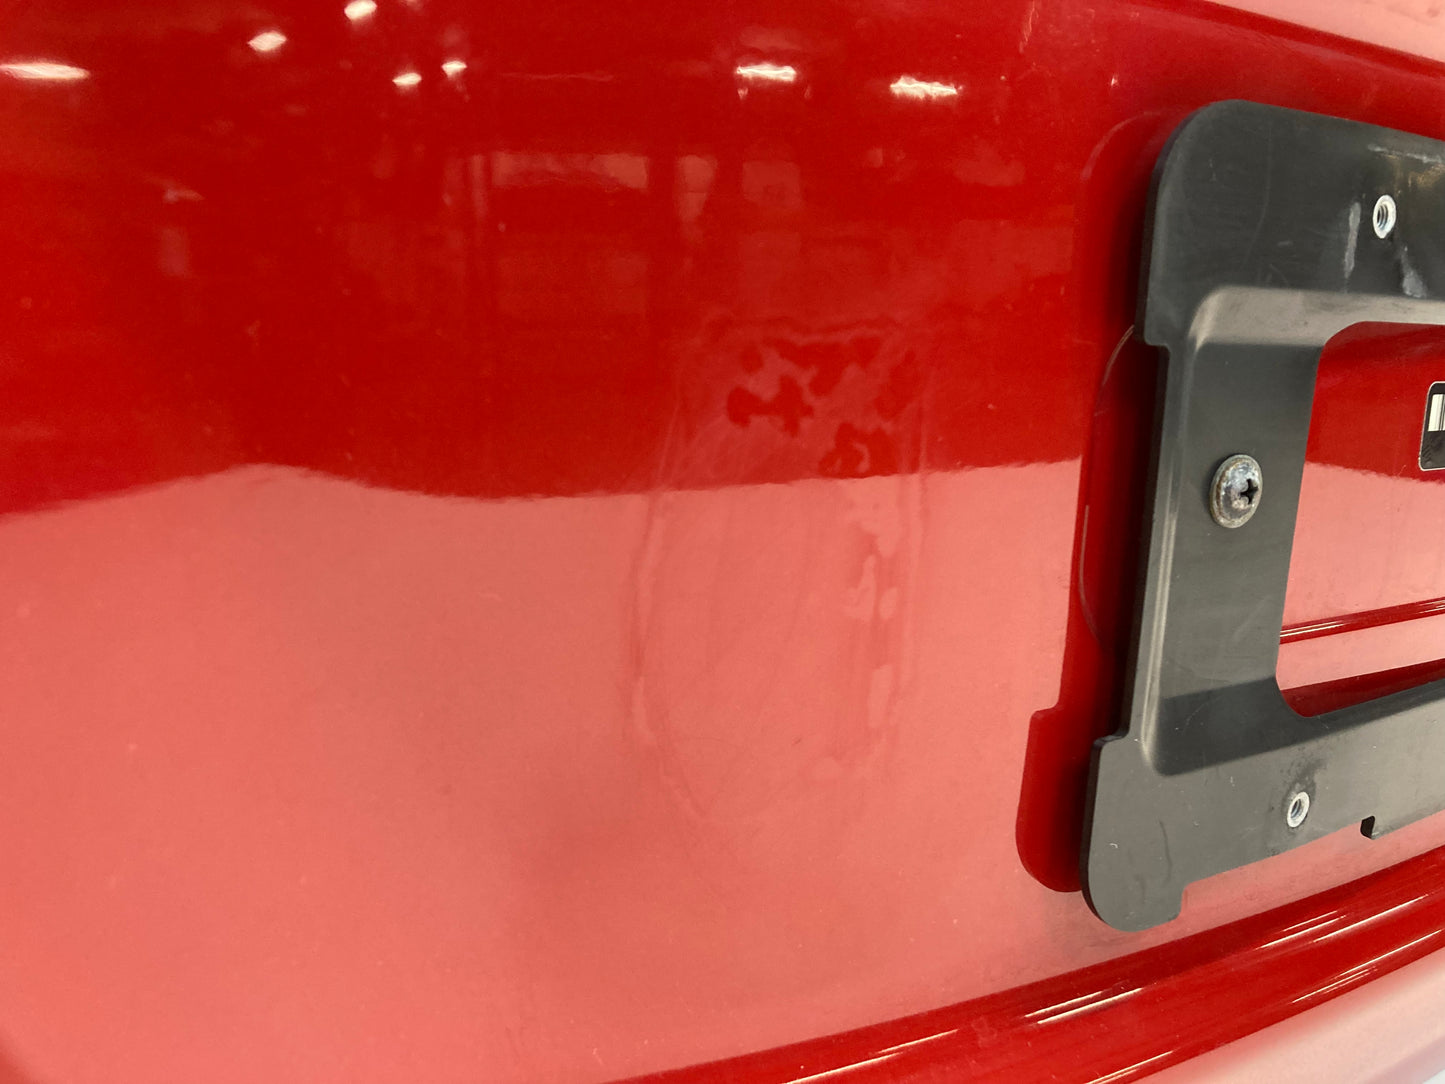 Mini Cooper Rear Hatch Trunk Lid Blazing Red 41007320545 14-22 F56 396